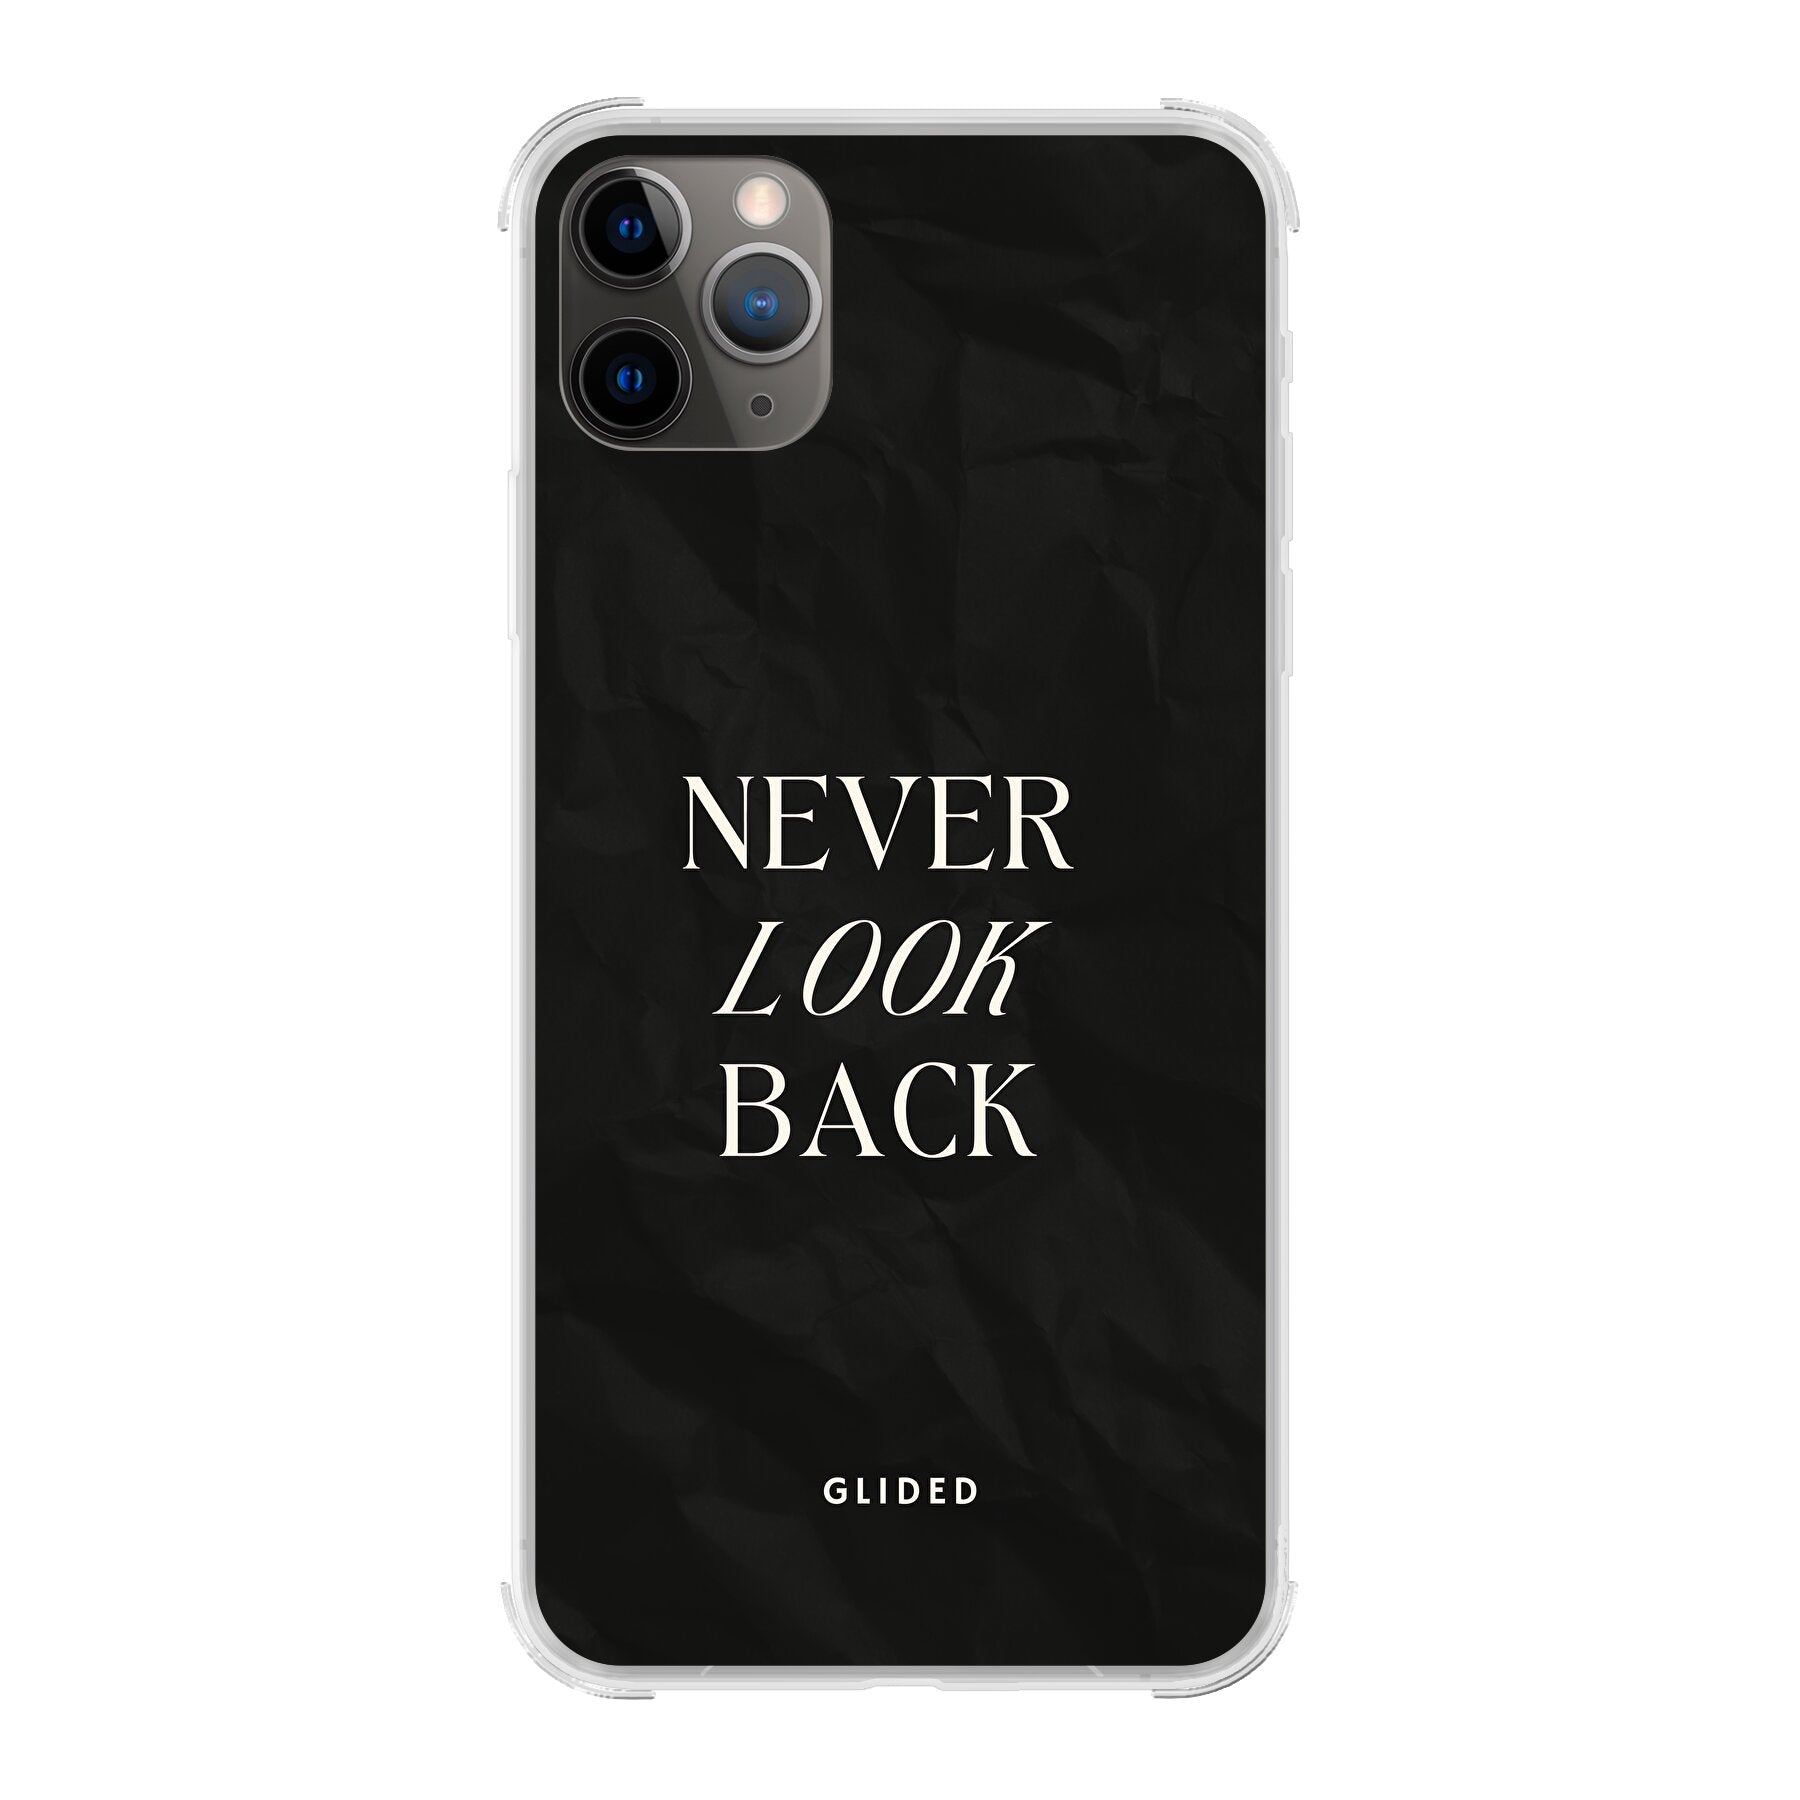 Never Back - iPhone 11 Pro Max Handyhülle Bumper case